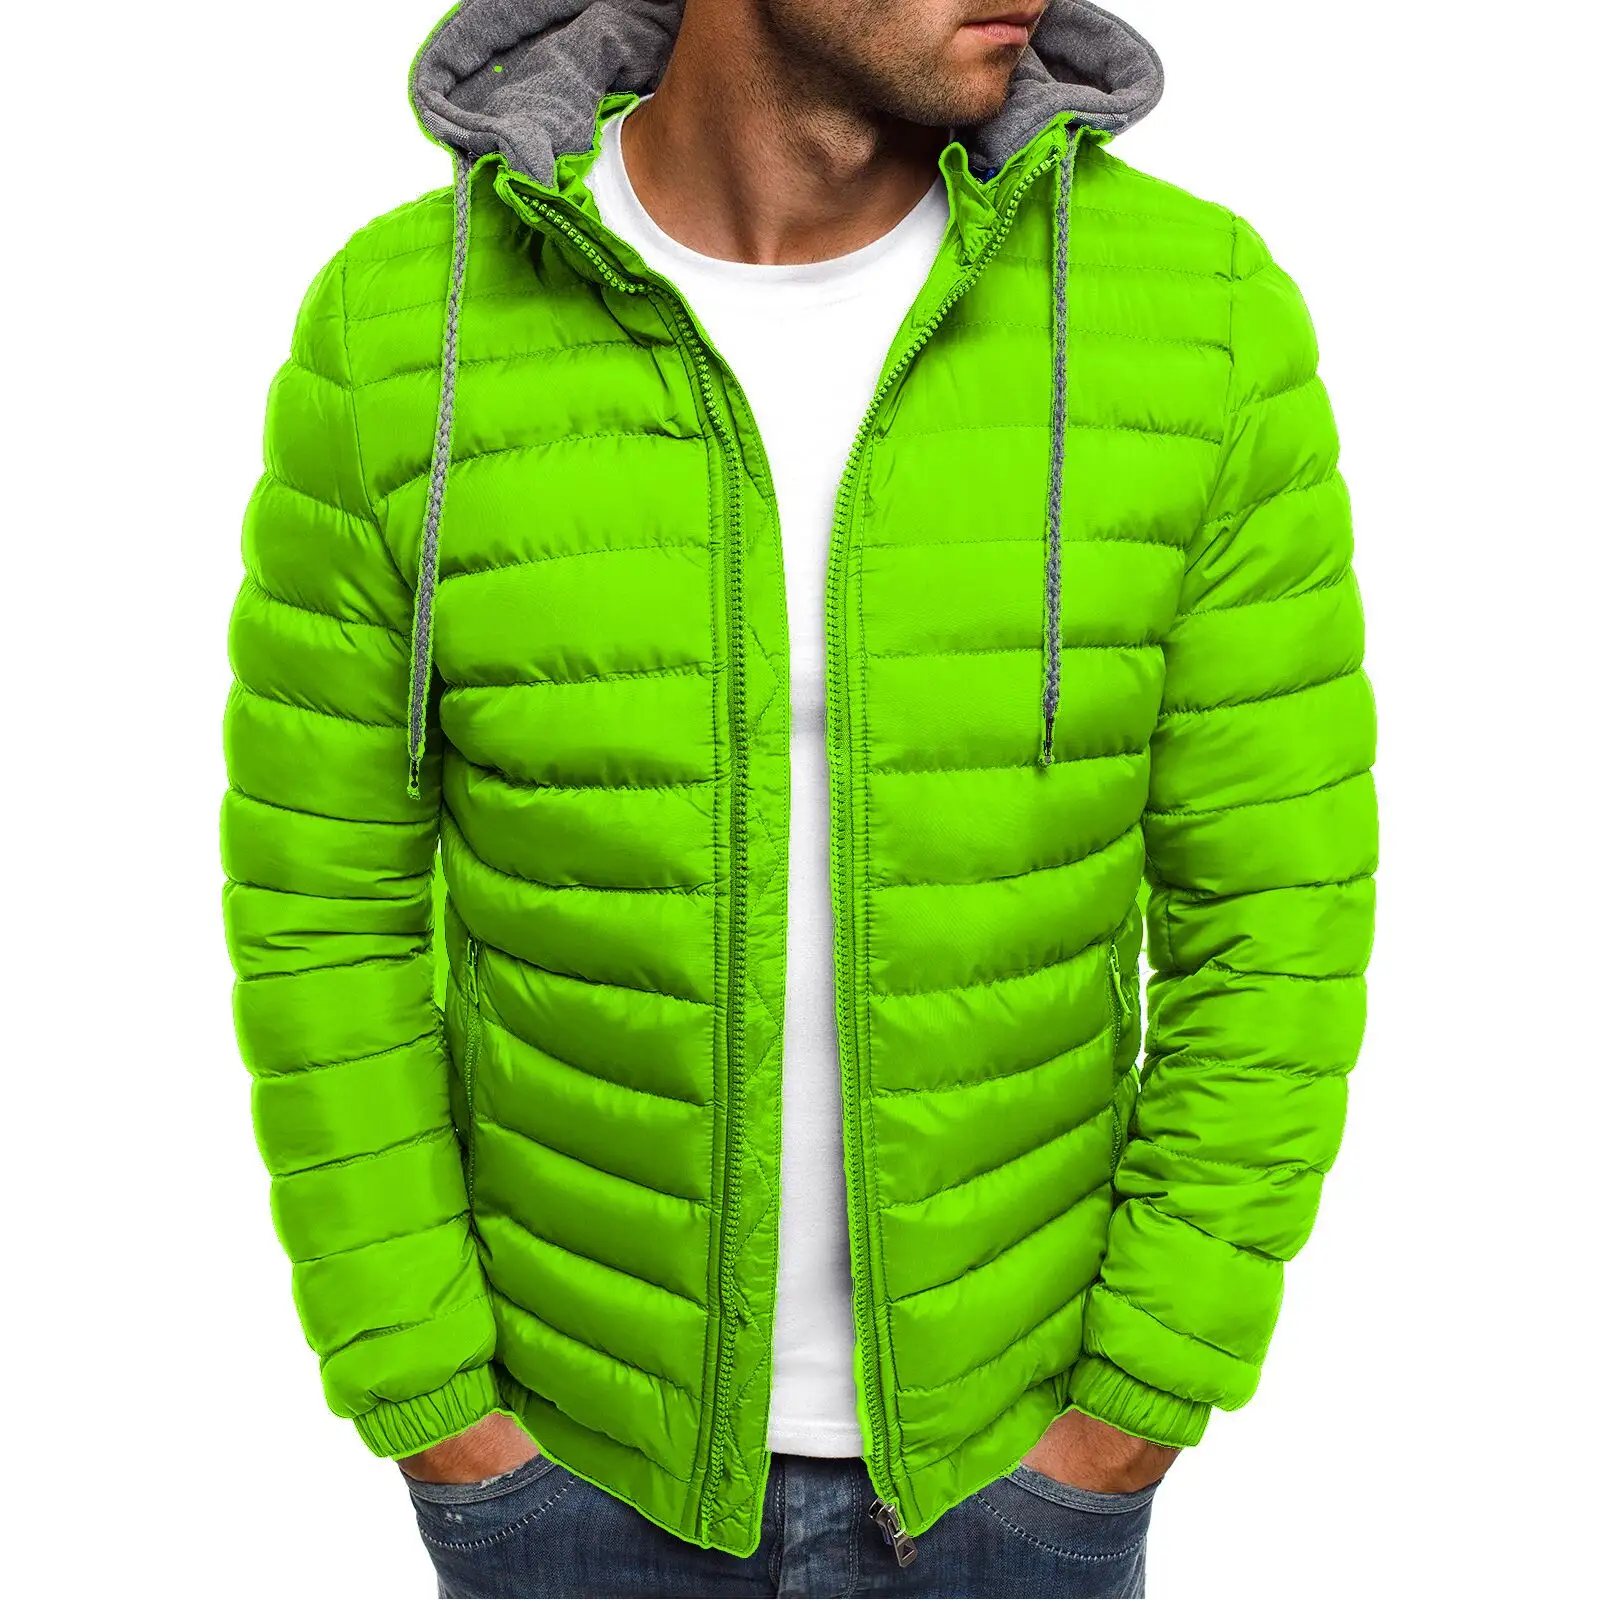 Attractive Price New Type Casual Clothing Men's Coat Jacket